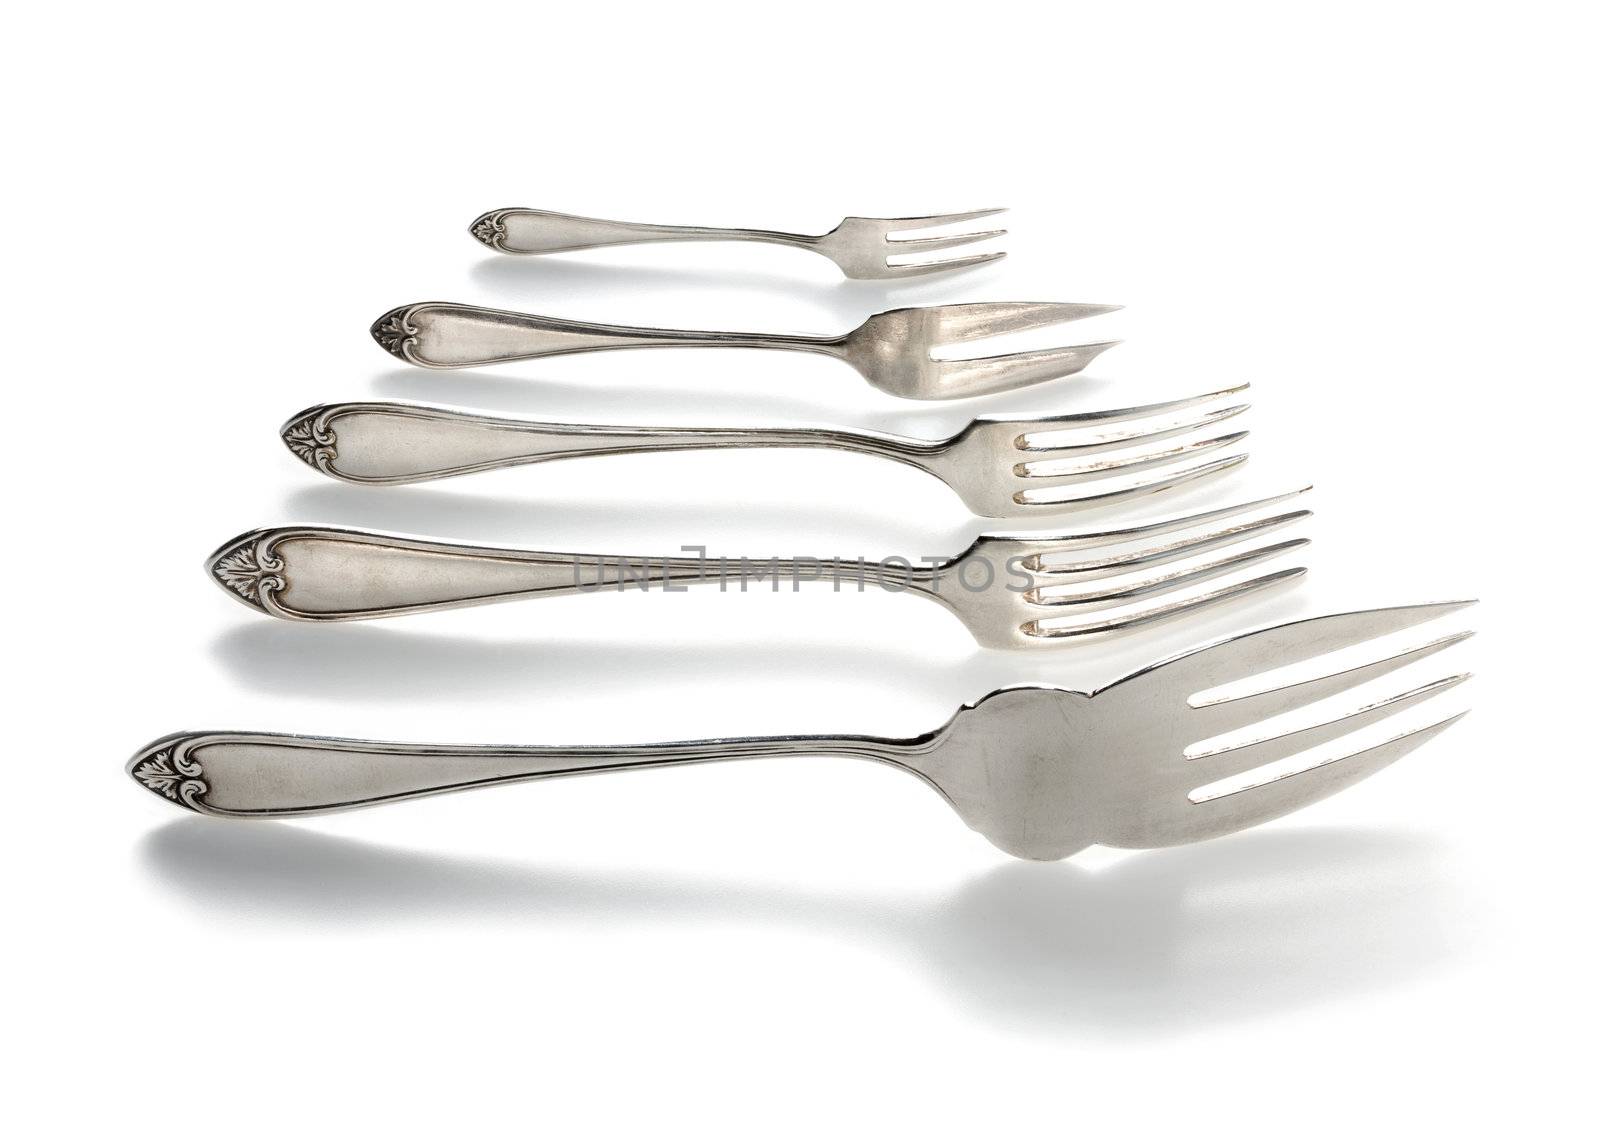 Silver forks set setout on a white background